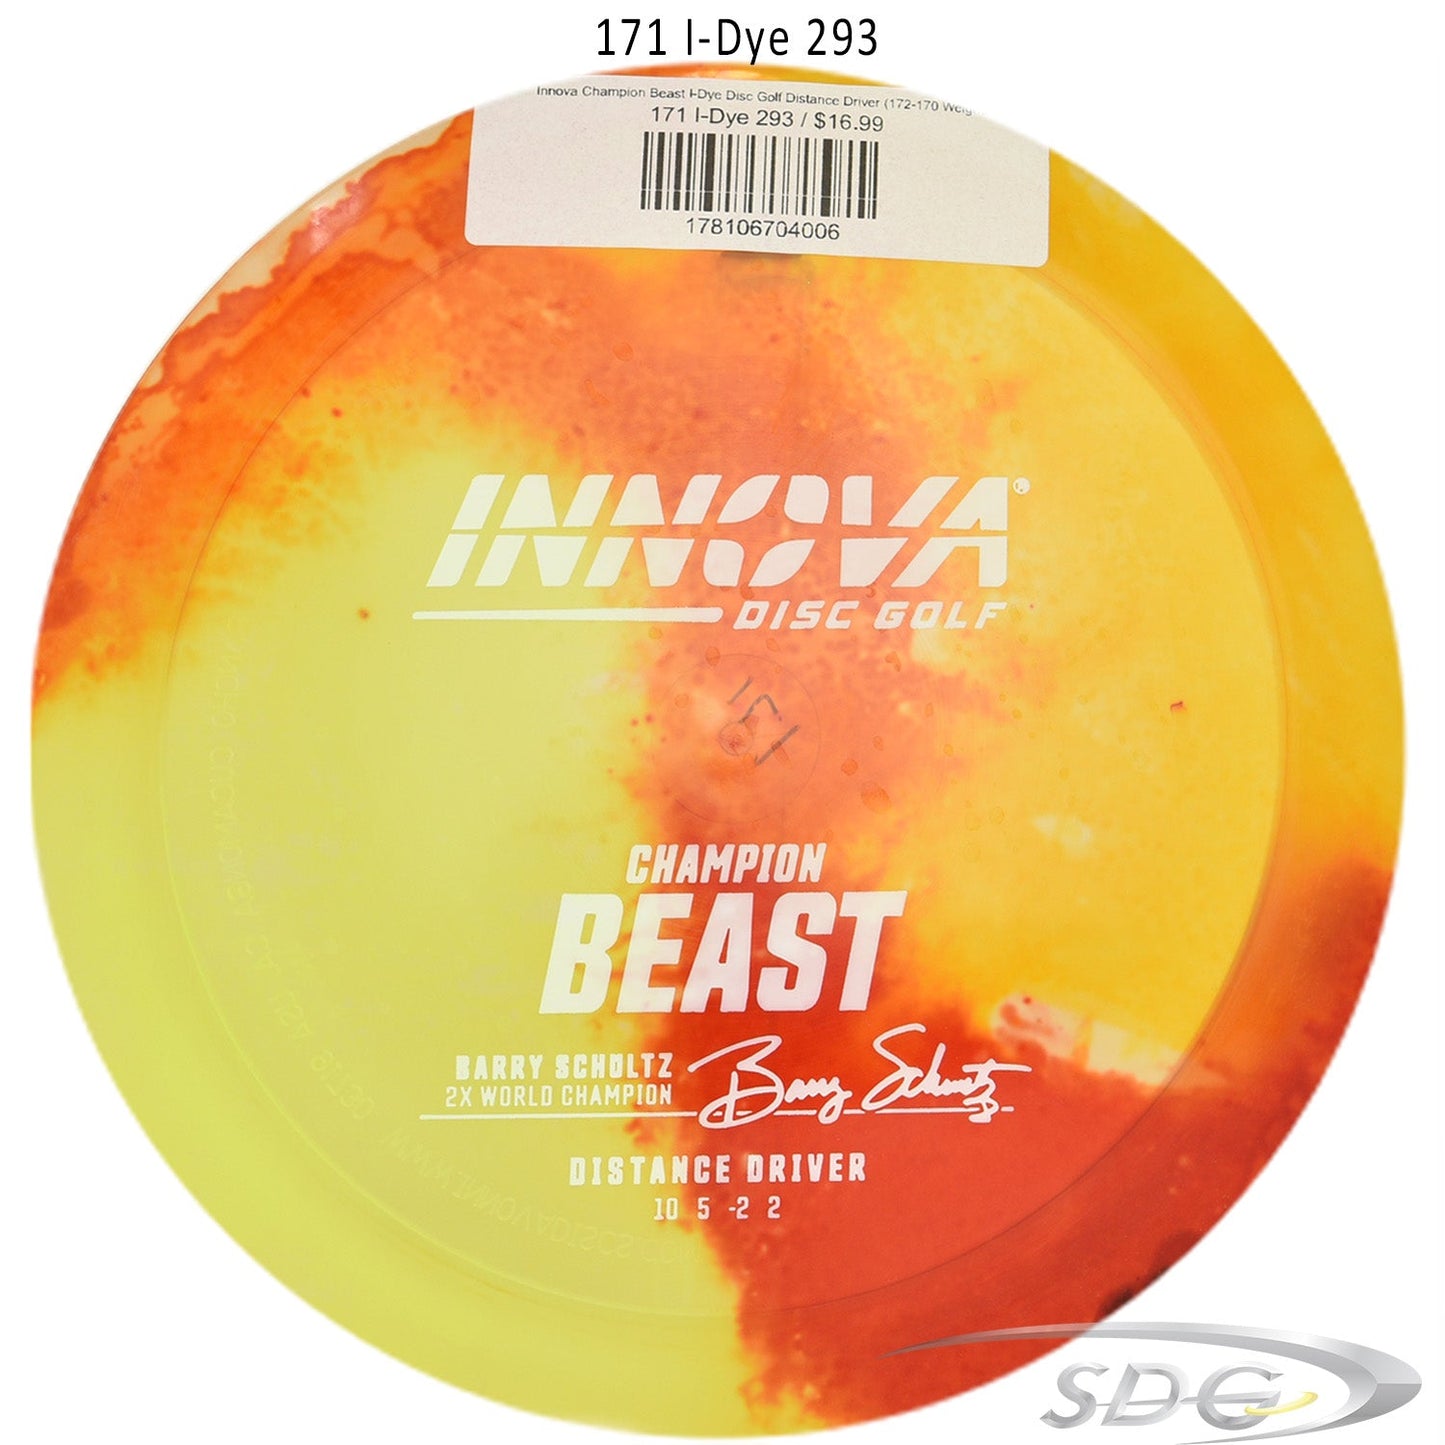 innova-champion-beast-i-dye-disc-golf-distance-driver 171 I-Dye 293